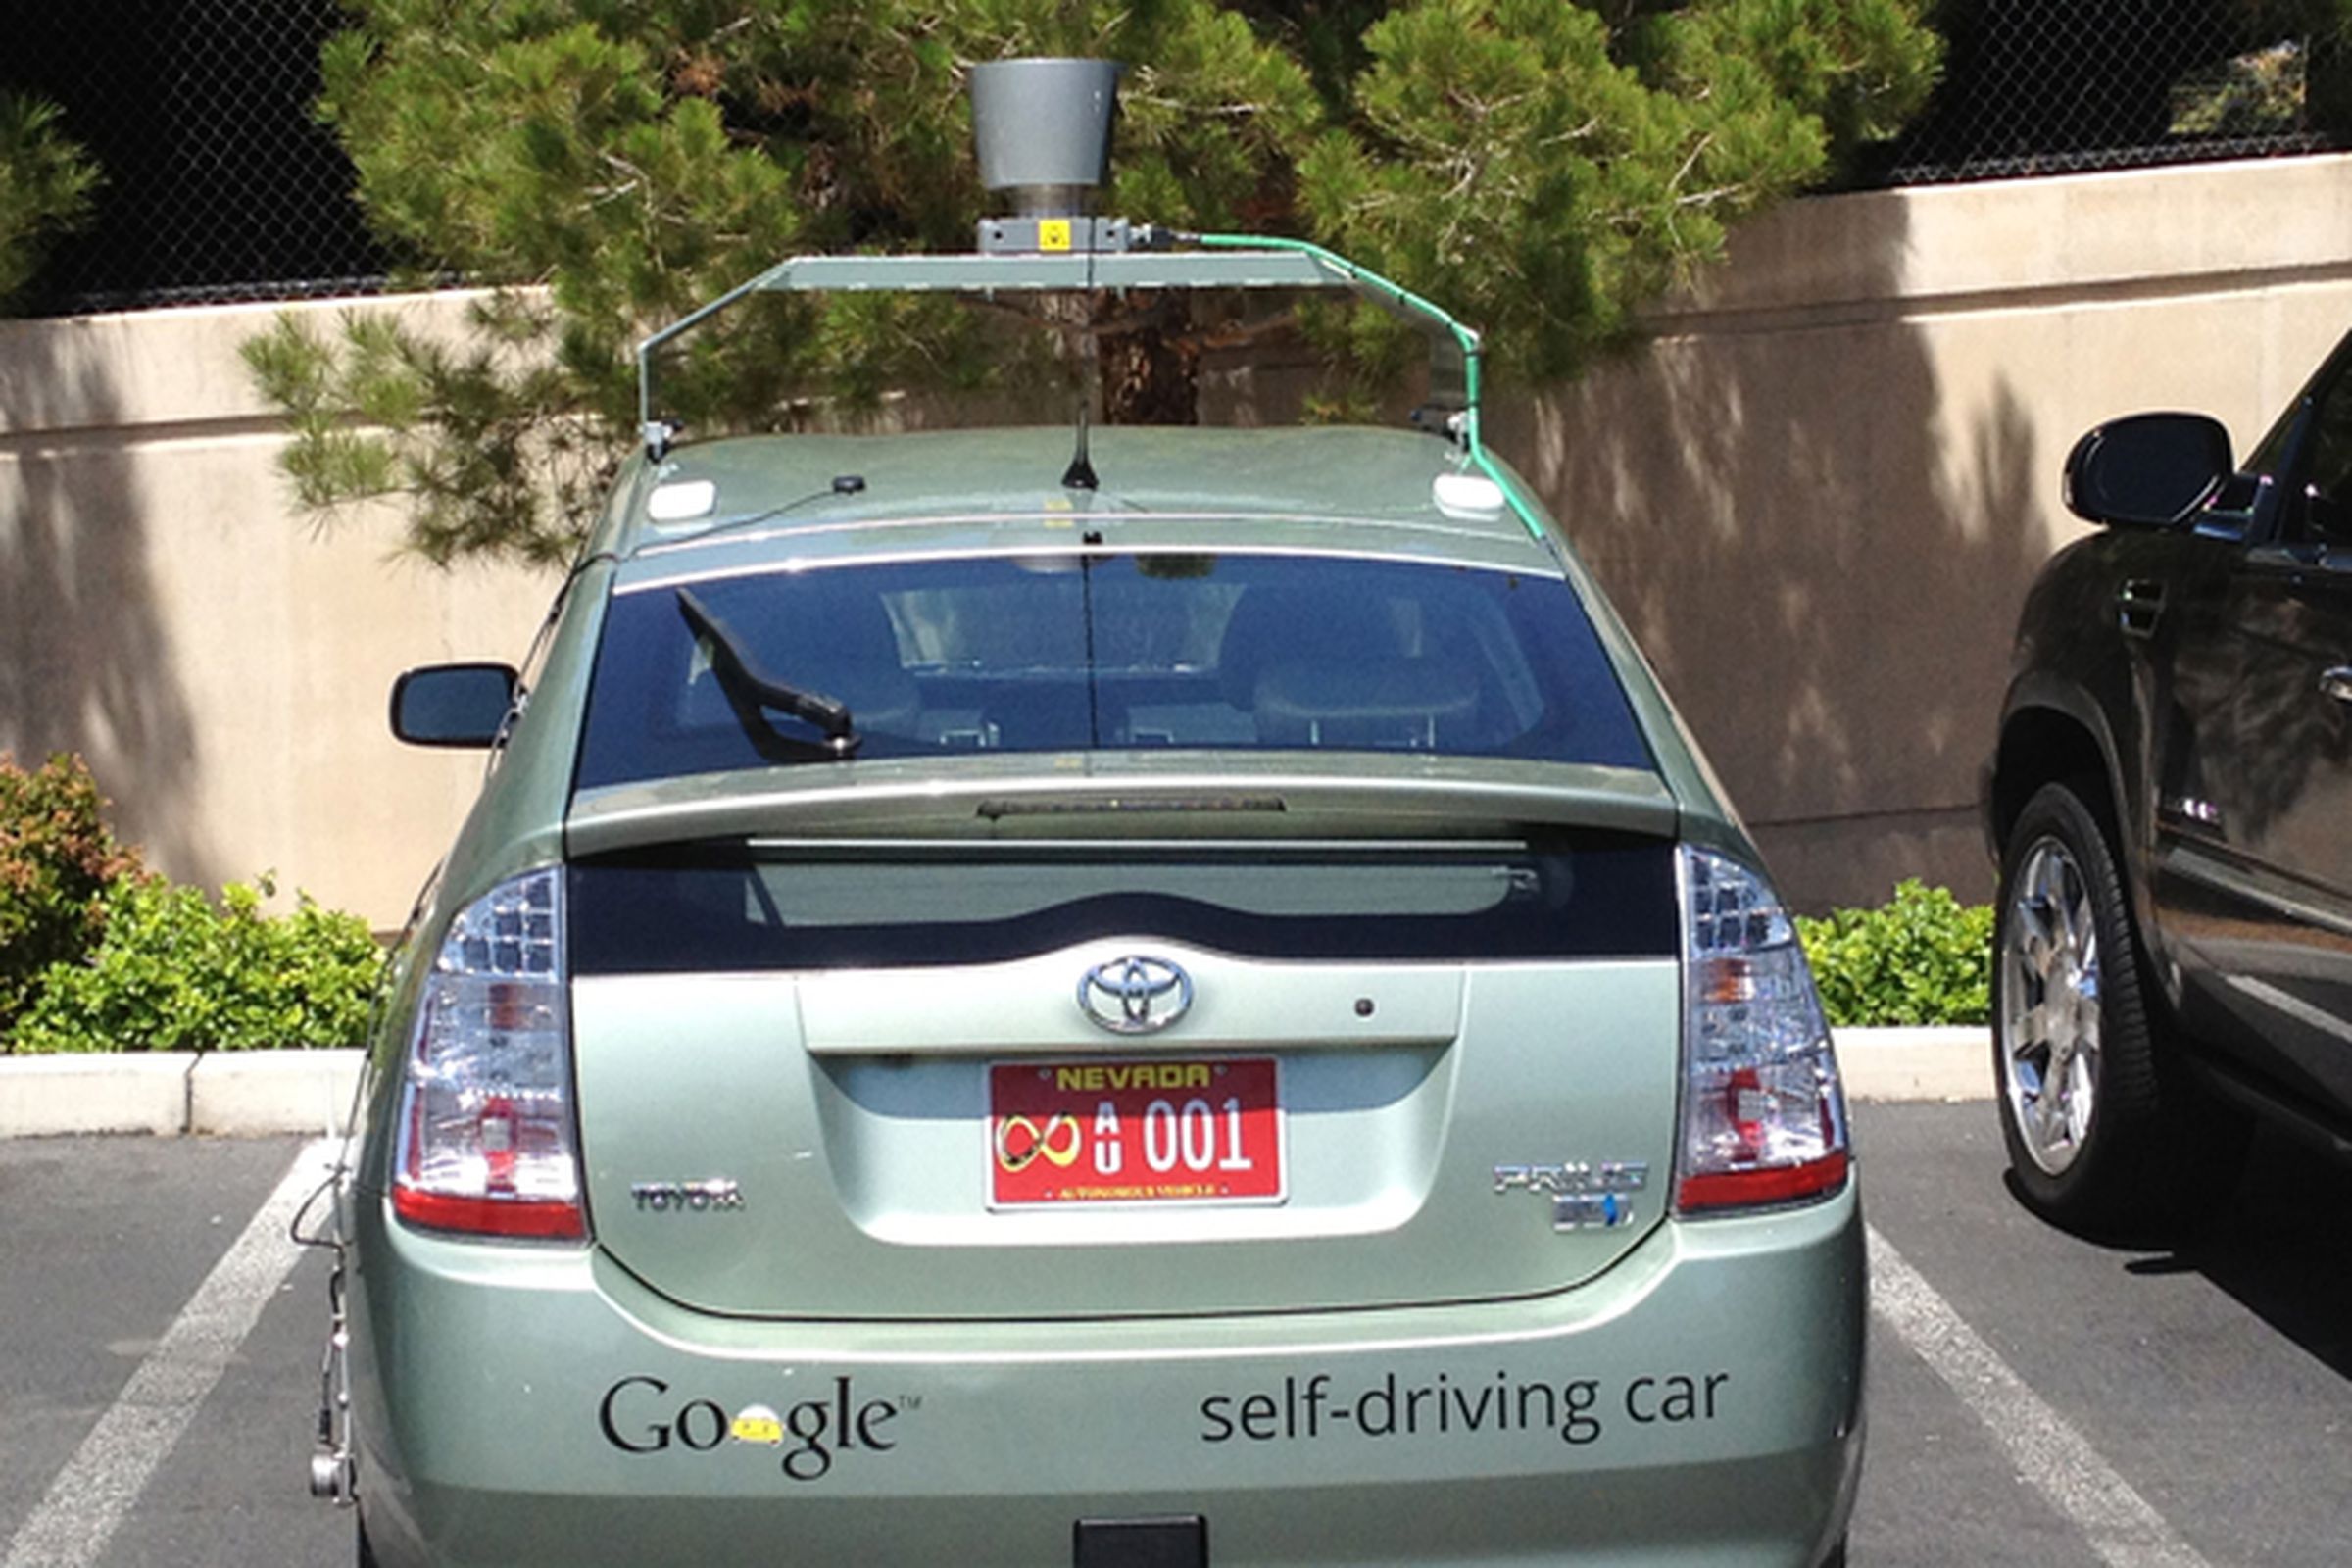 Google self-driving car in Nevada